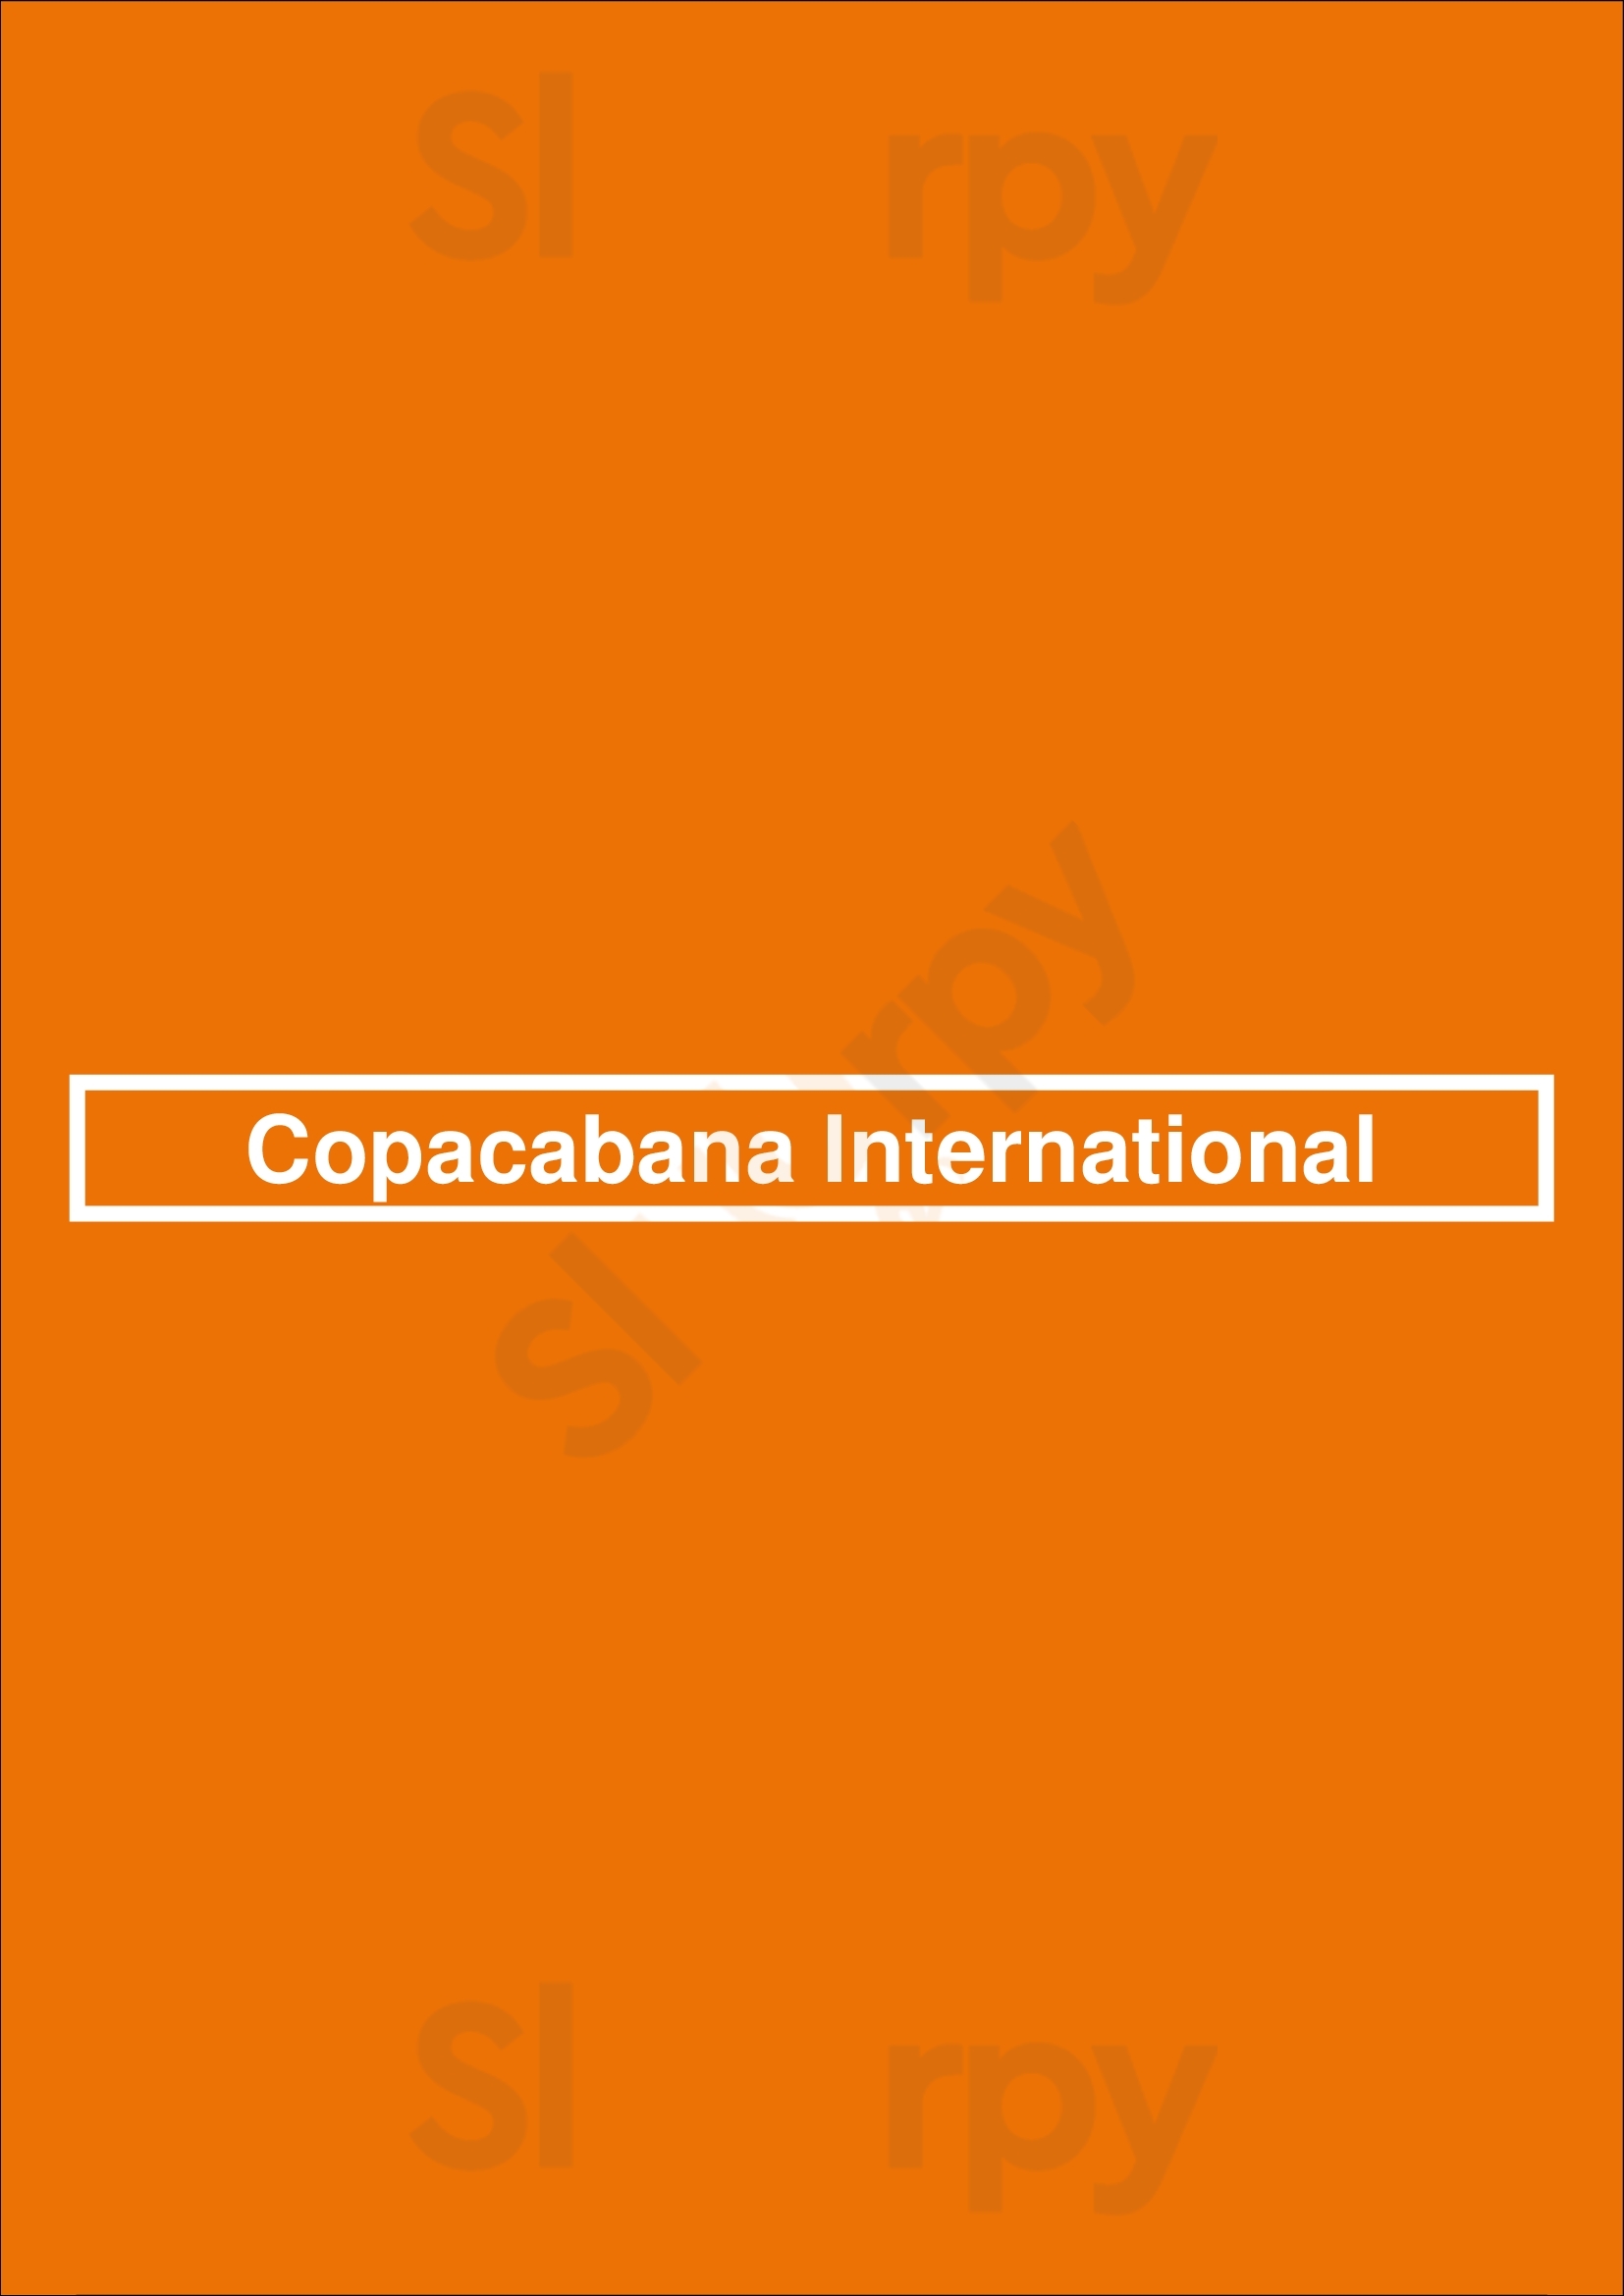 Copacabana International Fitzroy Menu - 1